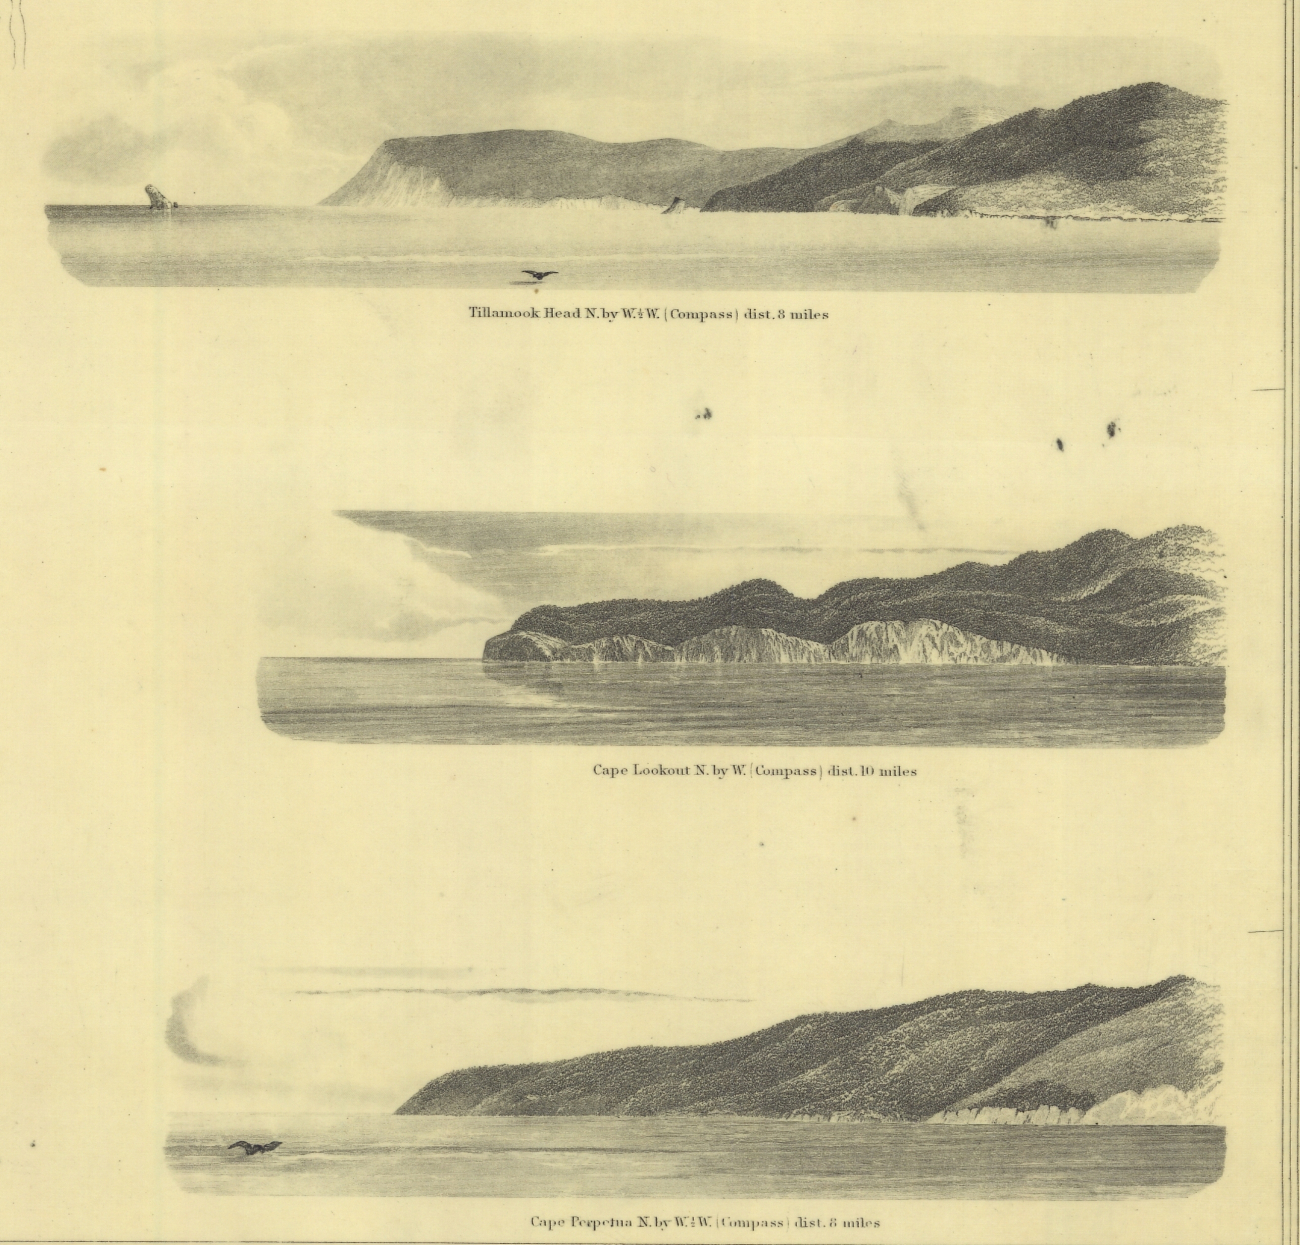 Views of Tillamook Head, Cape Lookout, and Cape Perpetua